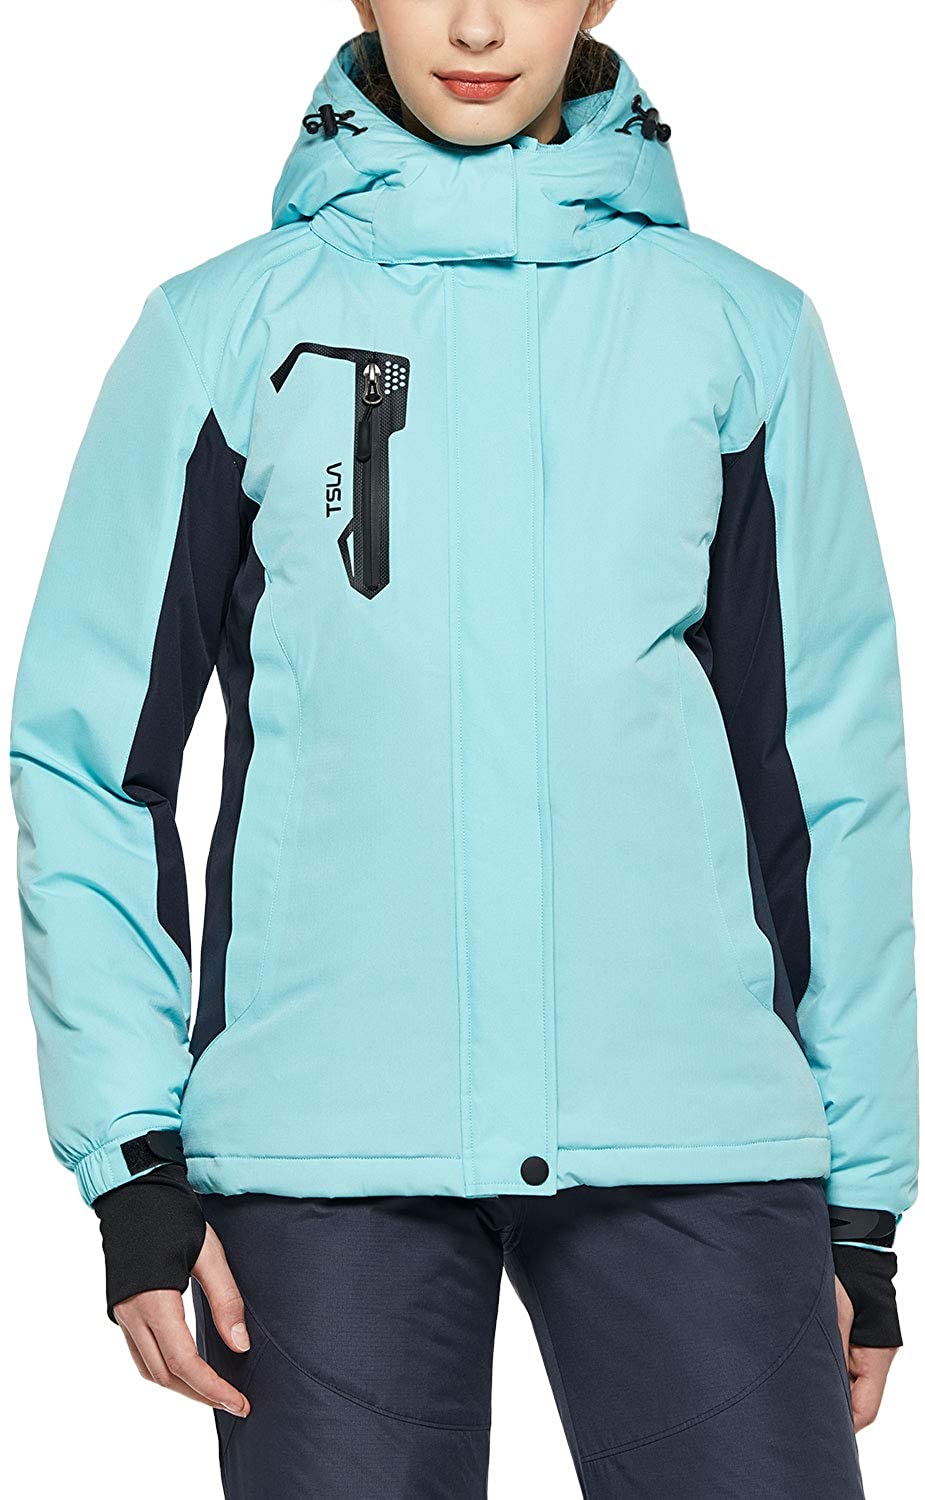 TSLA Womens Winter Ski Jacket Cold Weather Windproof Snowboard Jacket with Hood Waterproof Warm Insulated Snow Coats 